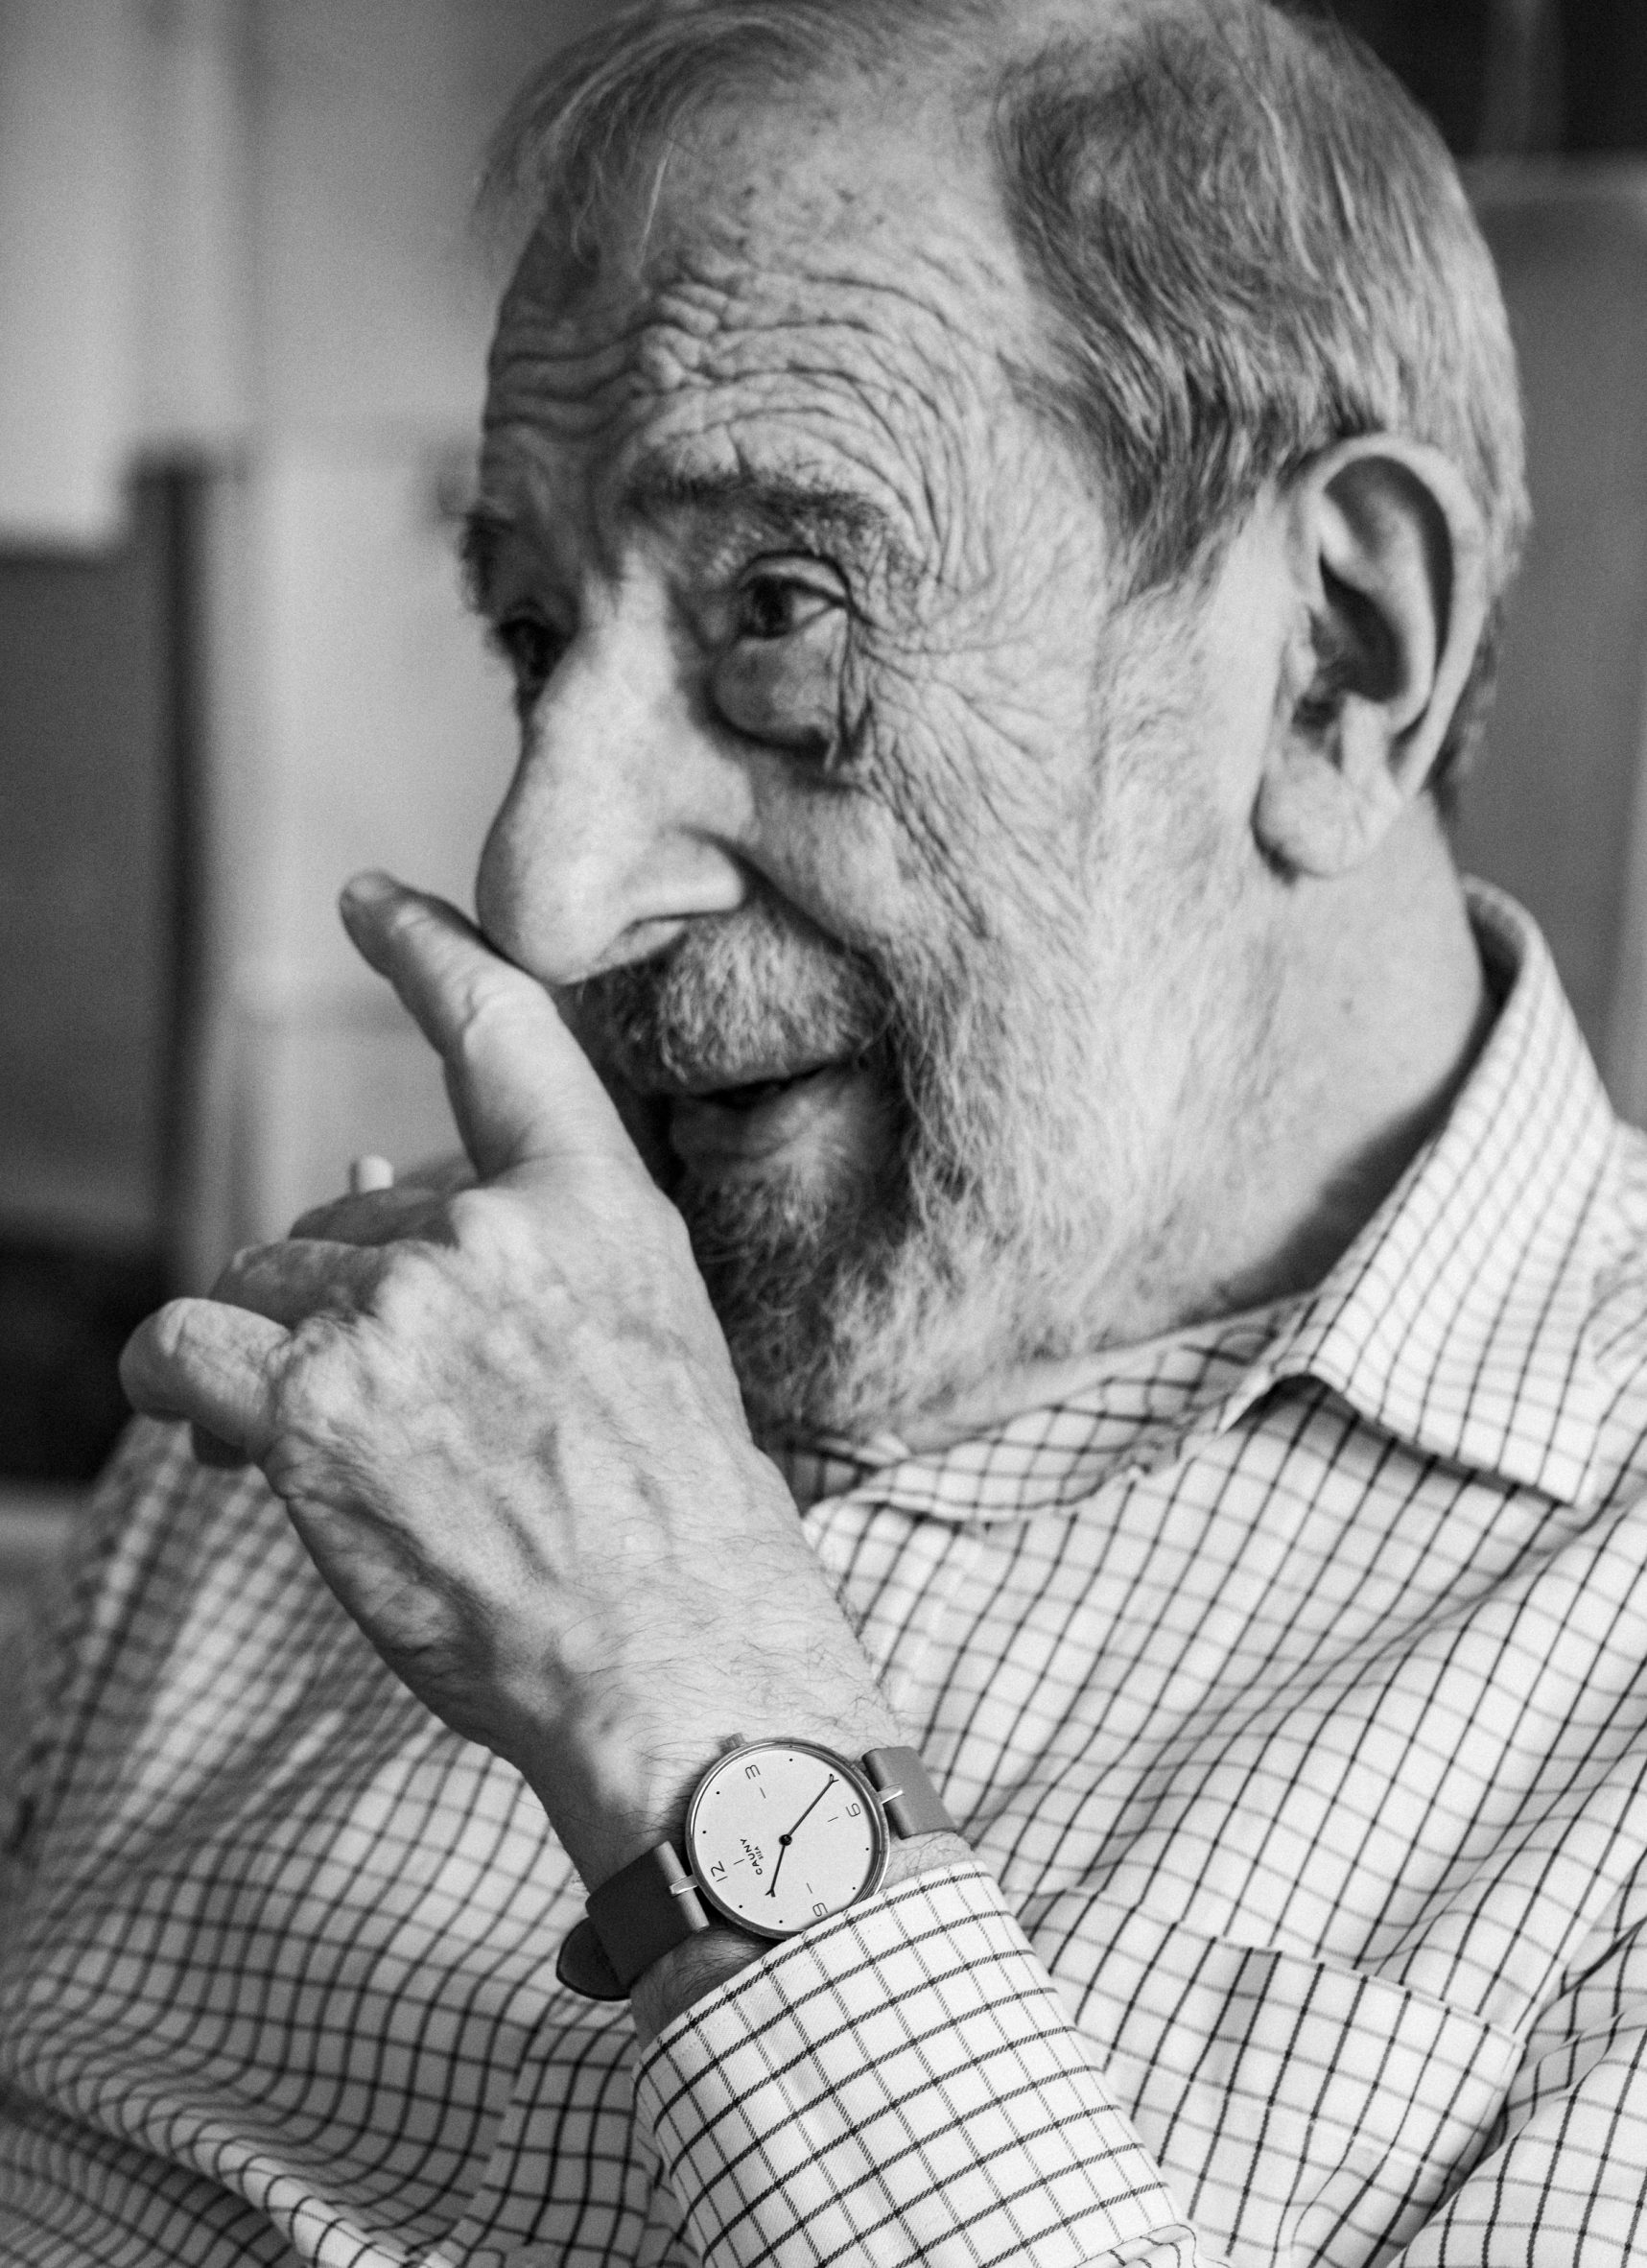 Alvaro Siza watch and portrait